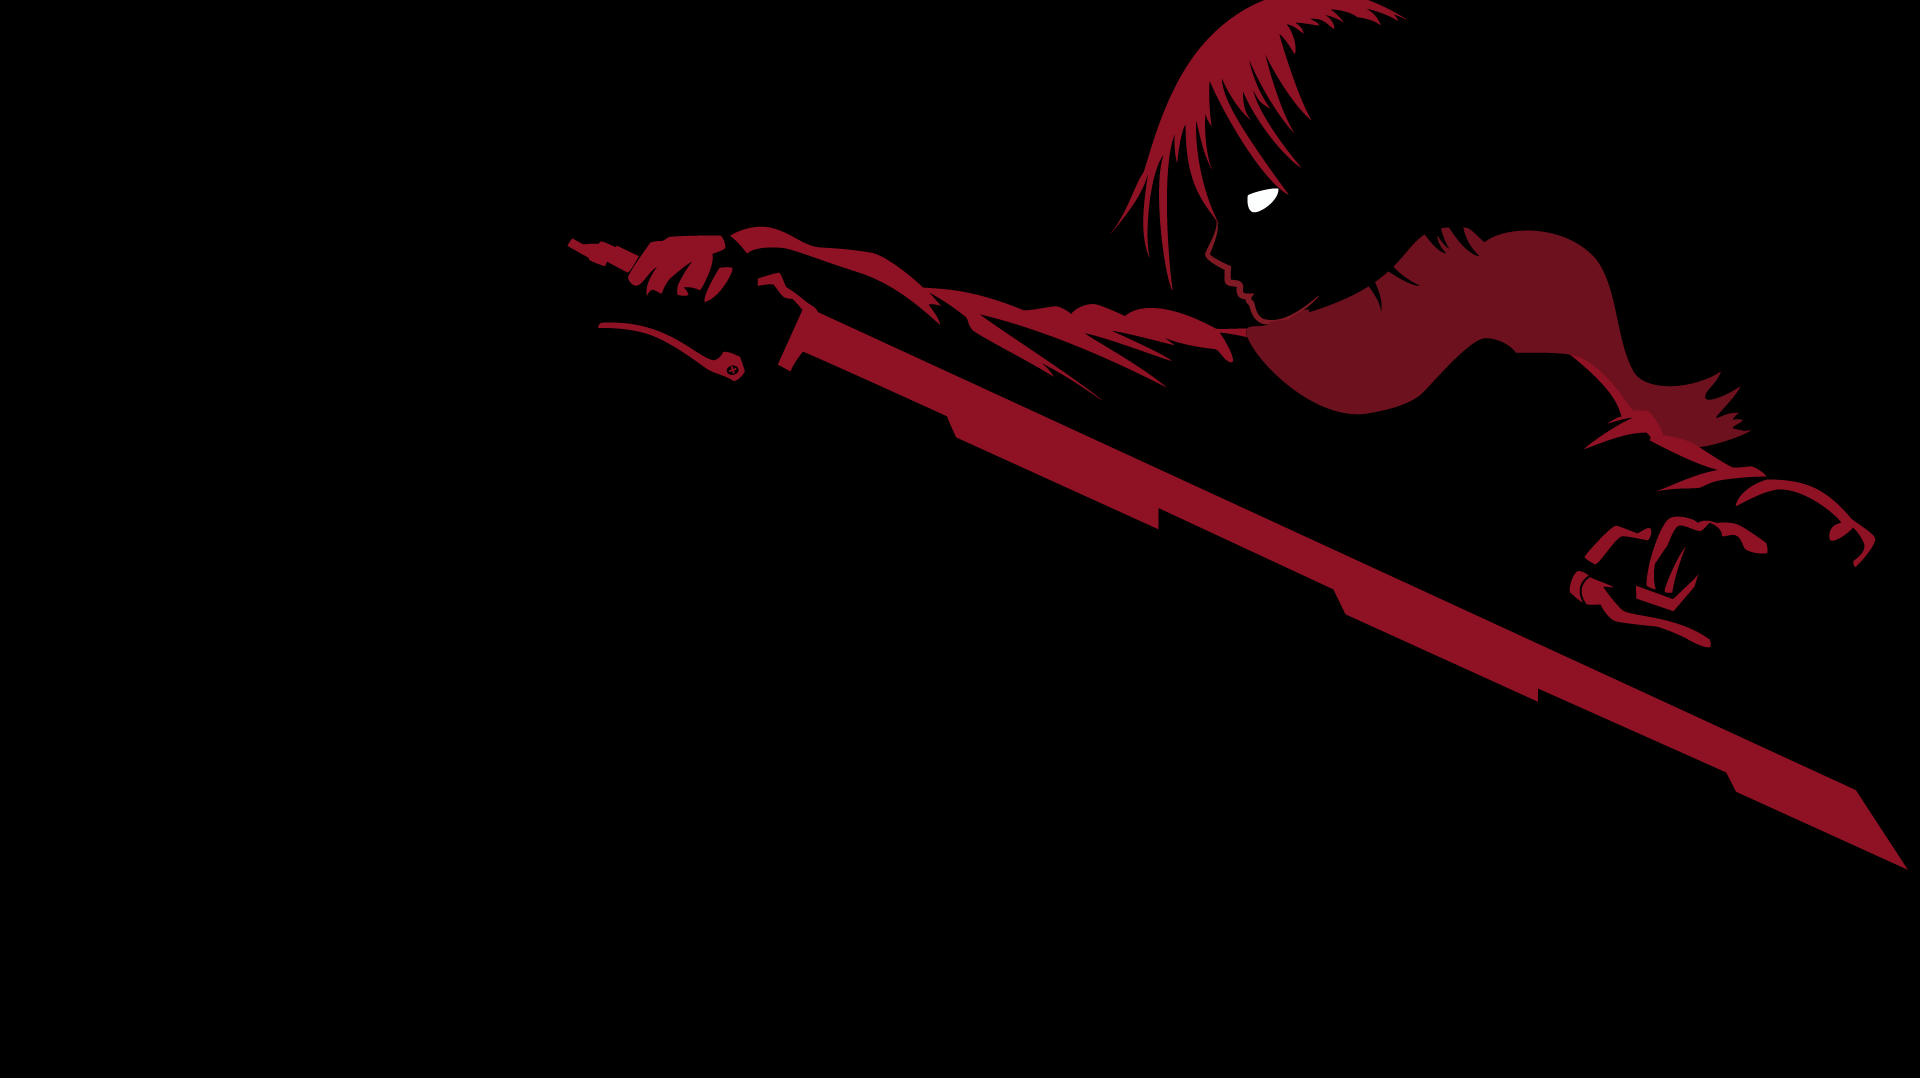 Anime 1920x1080 Mikasa Ackerman Shingeki no Kyojin simple background black background